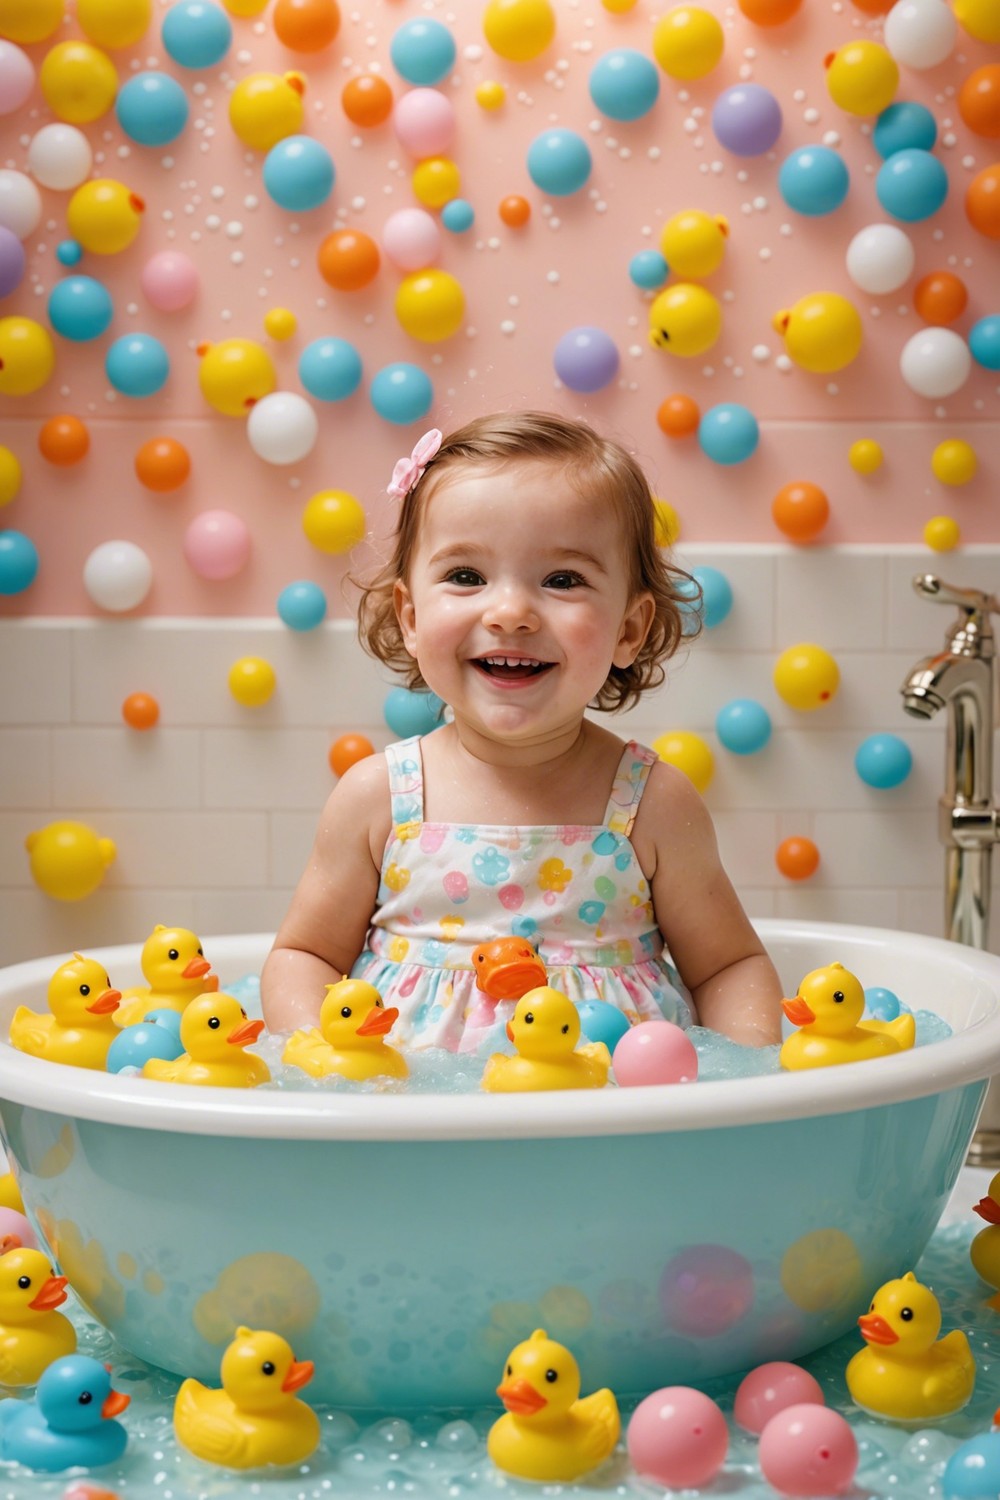 Bathtime Fun with Rubber Duckies